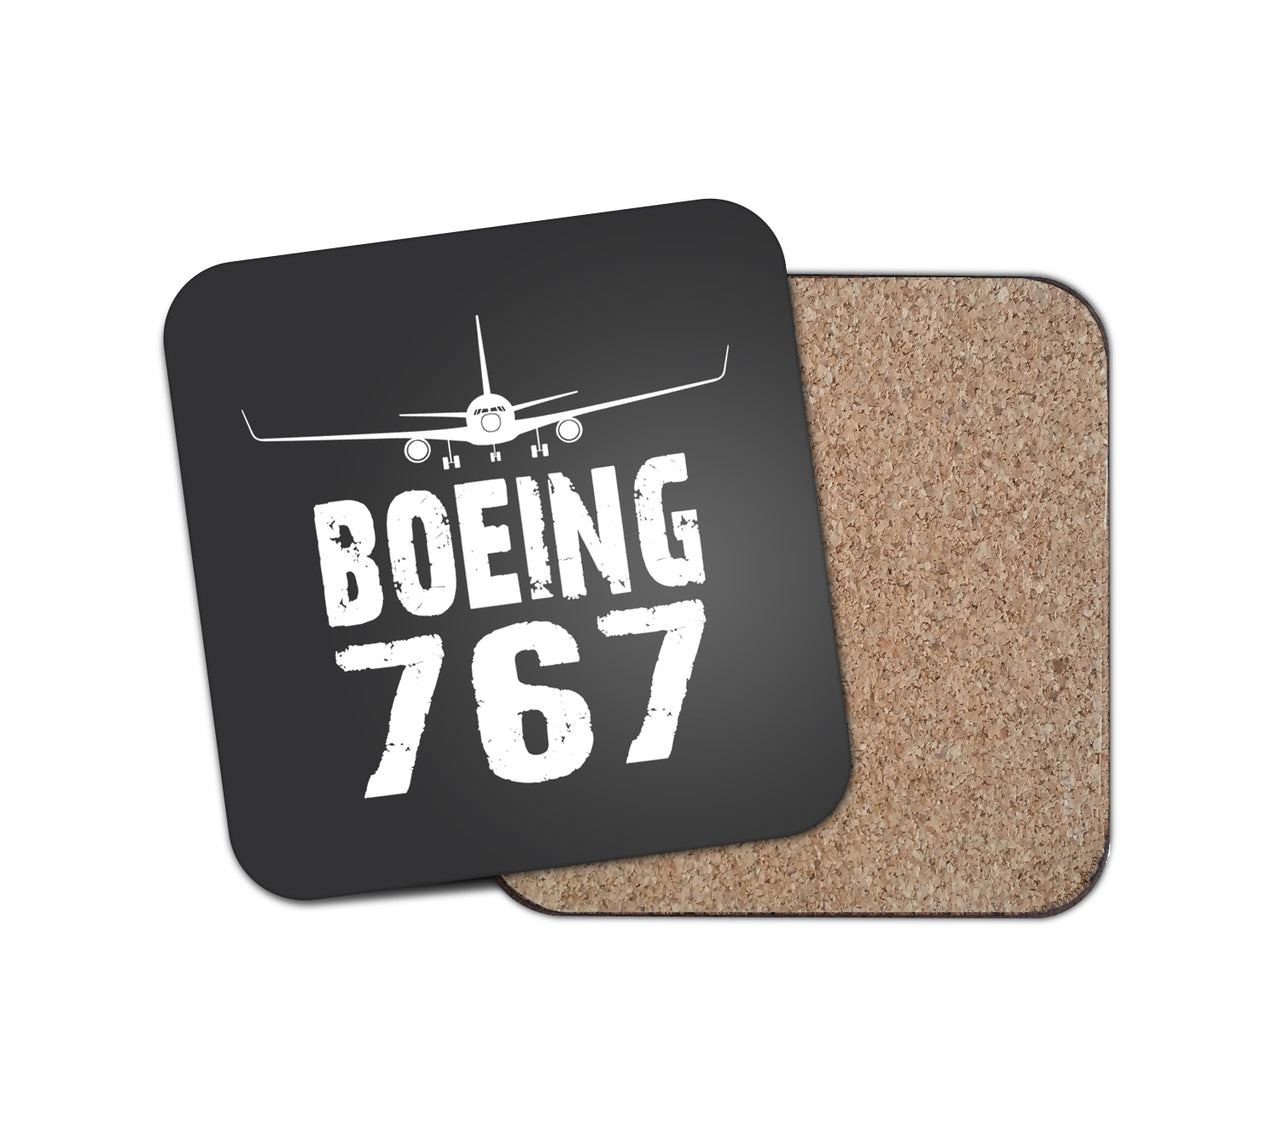 Boeing 767 & Plane Designed Coasters